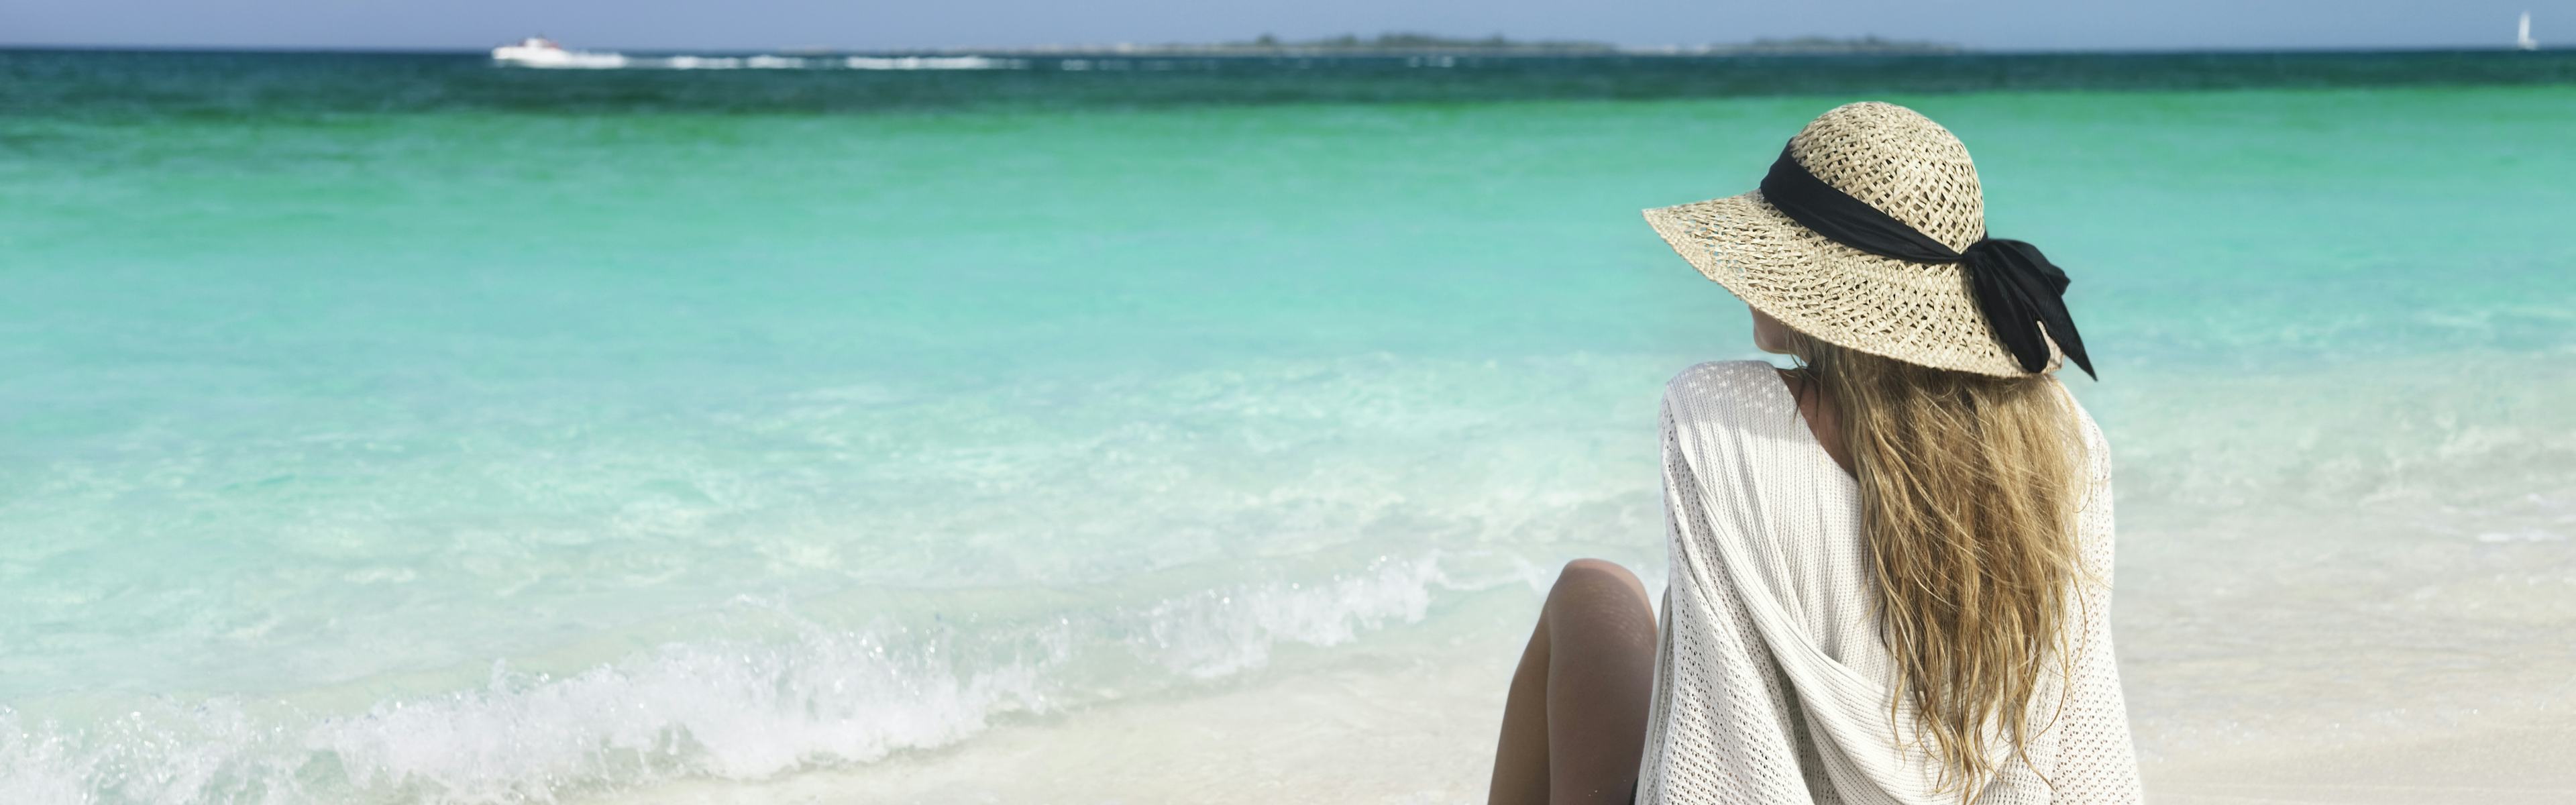 Woman sitting on beach in Bahamas